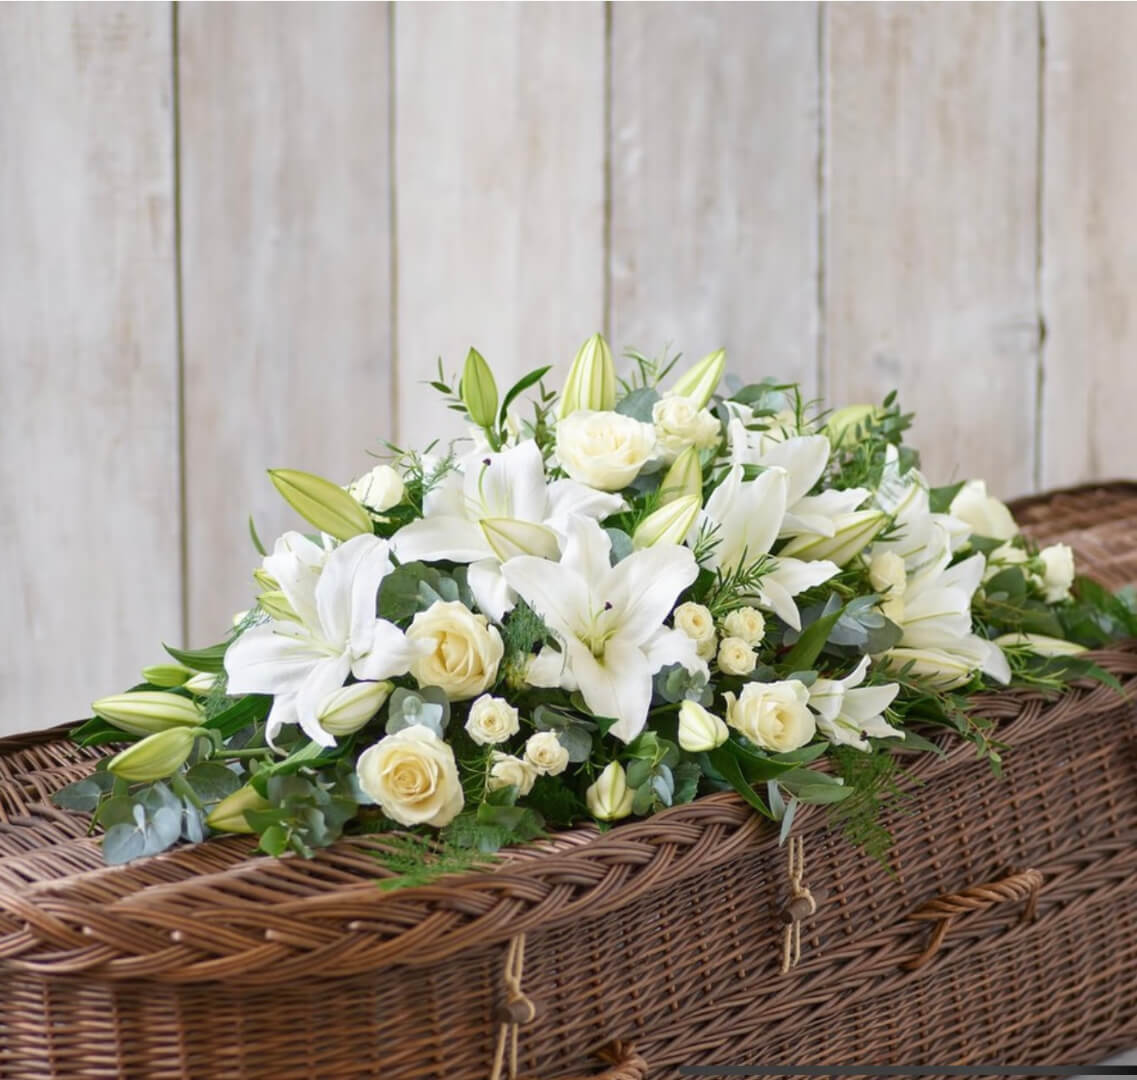 White flowers on woven casket